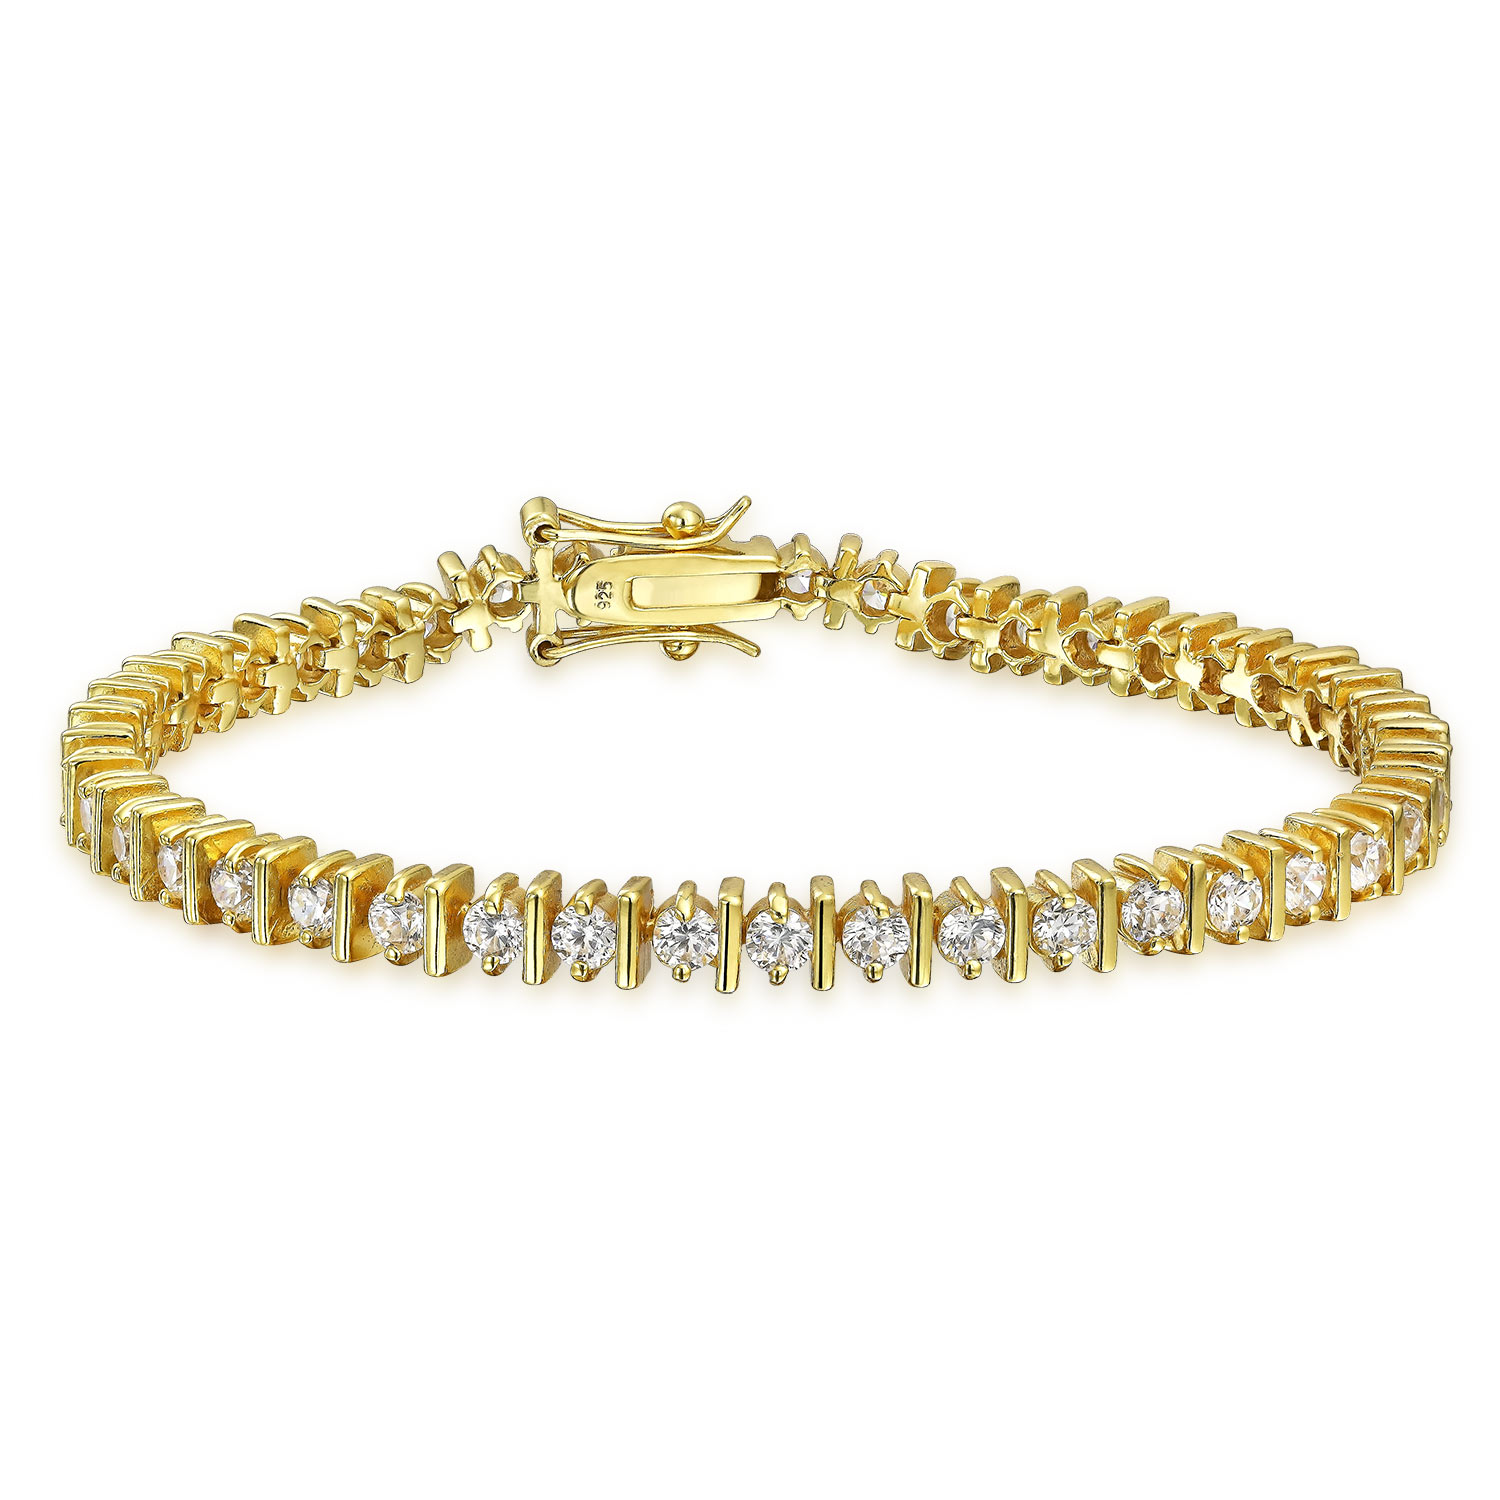 Glitzs Jewels Brass Crystal Elements Link Bracelet 7.5'' 